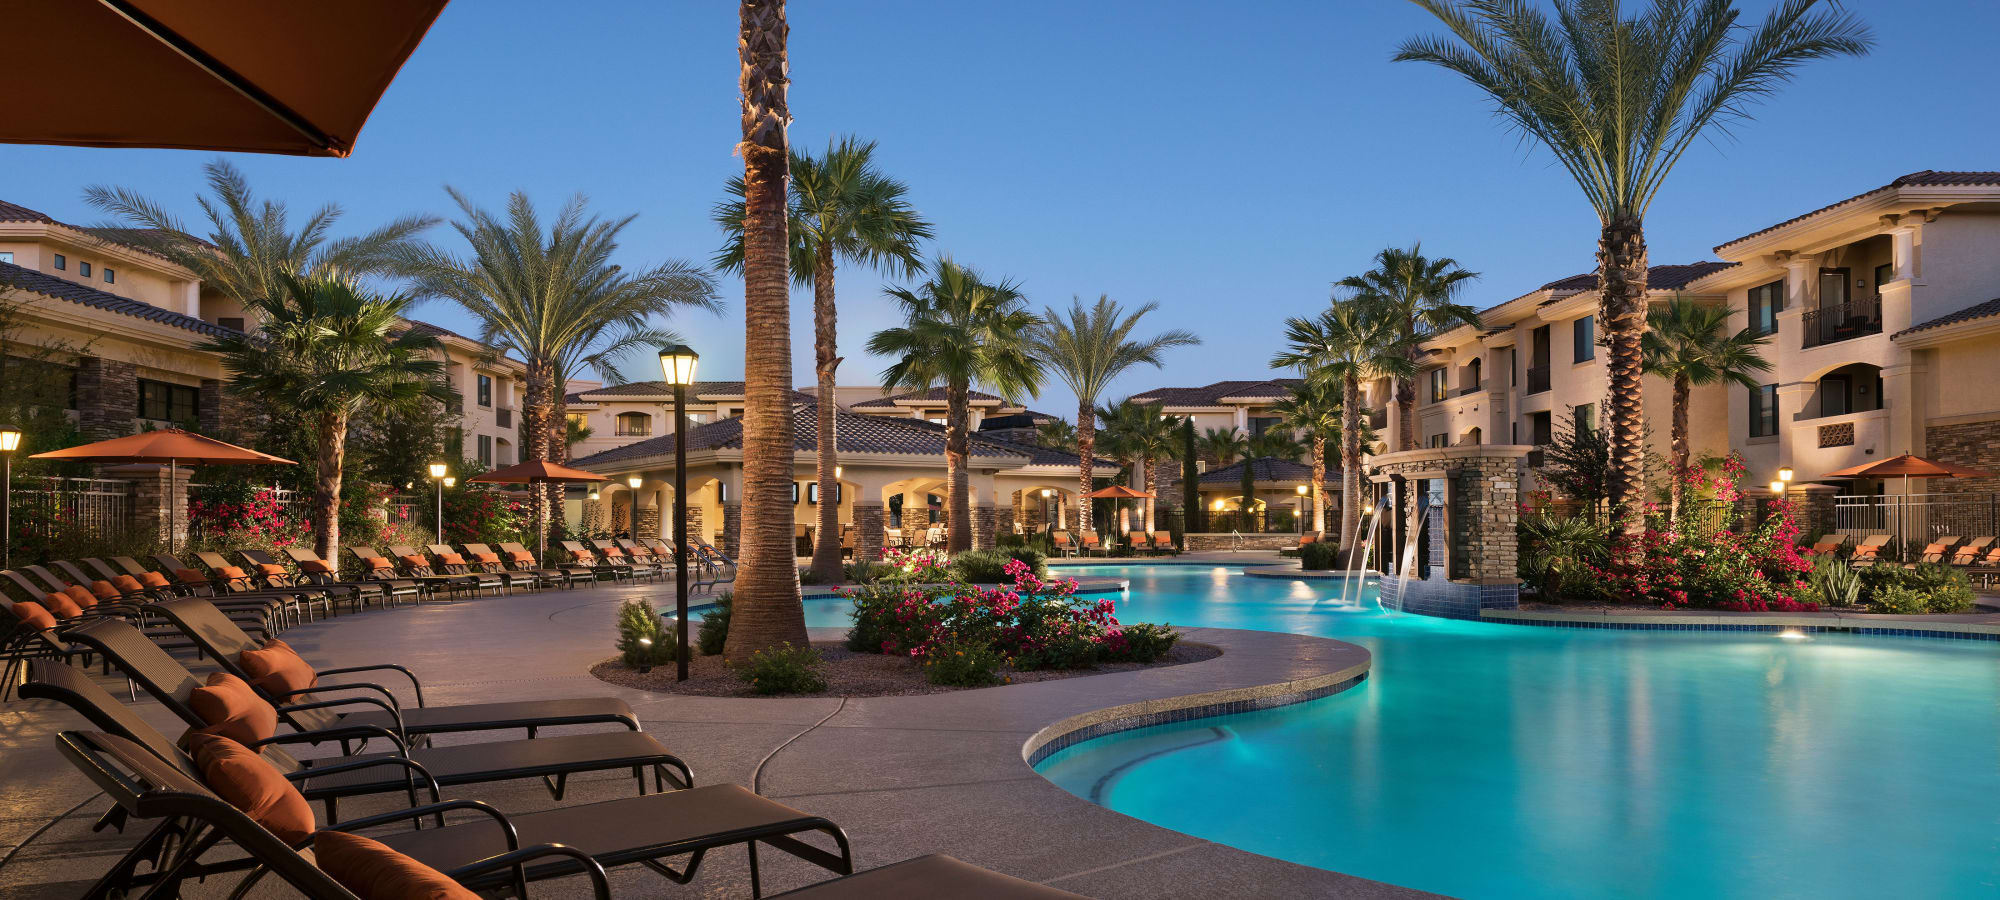 Swimming pool at San Travesia in Scottsdale, Arizona